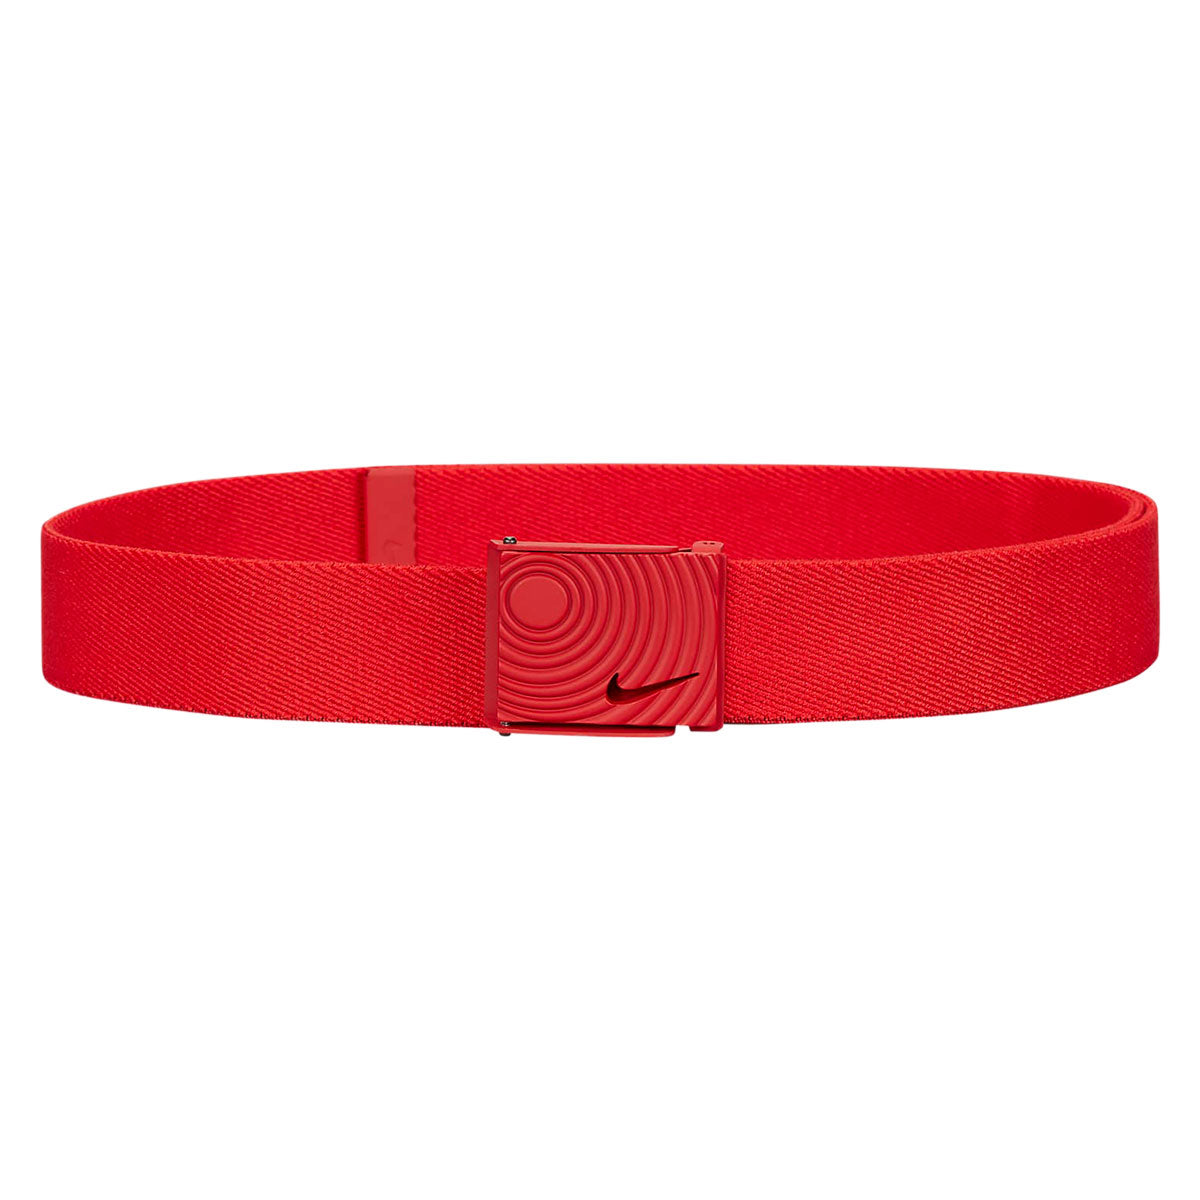 Nike Outsole Stretch Web Belt - University Red image 1